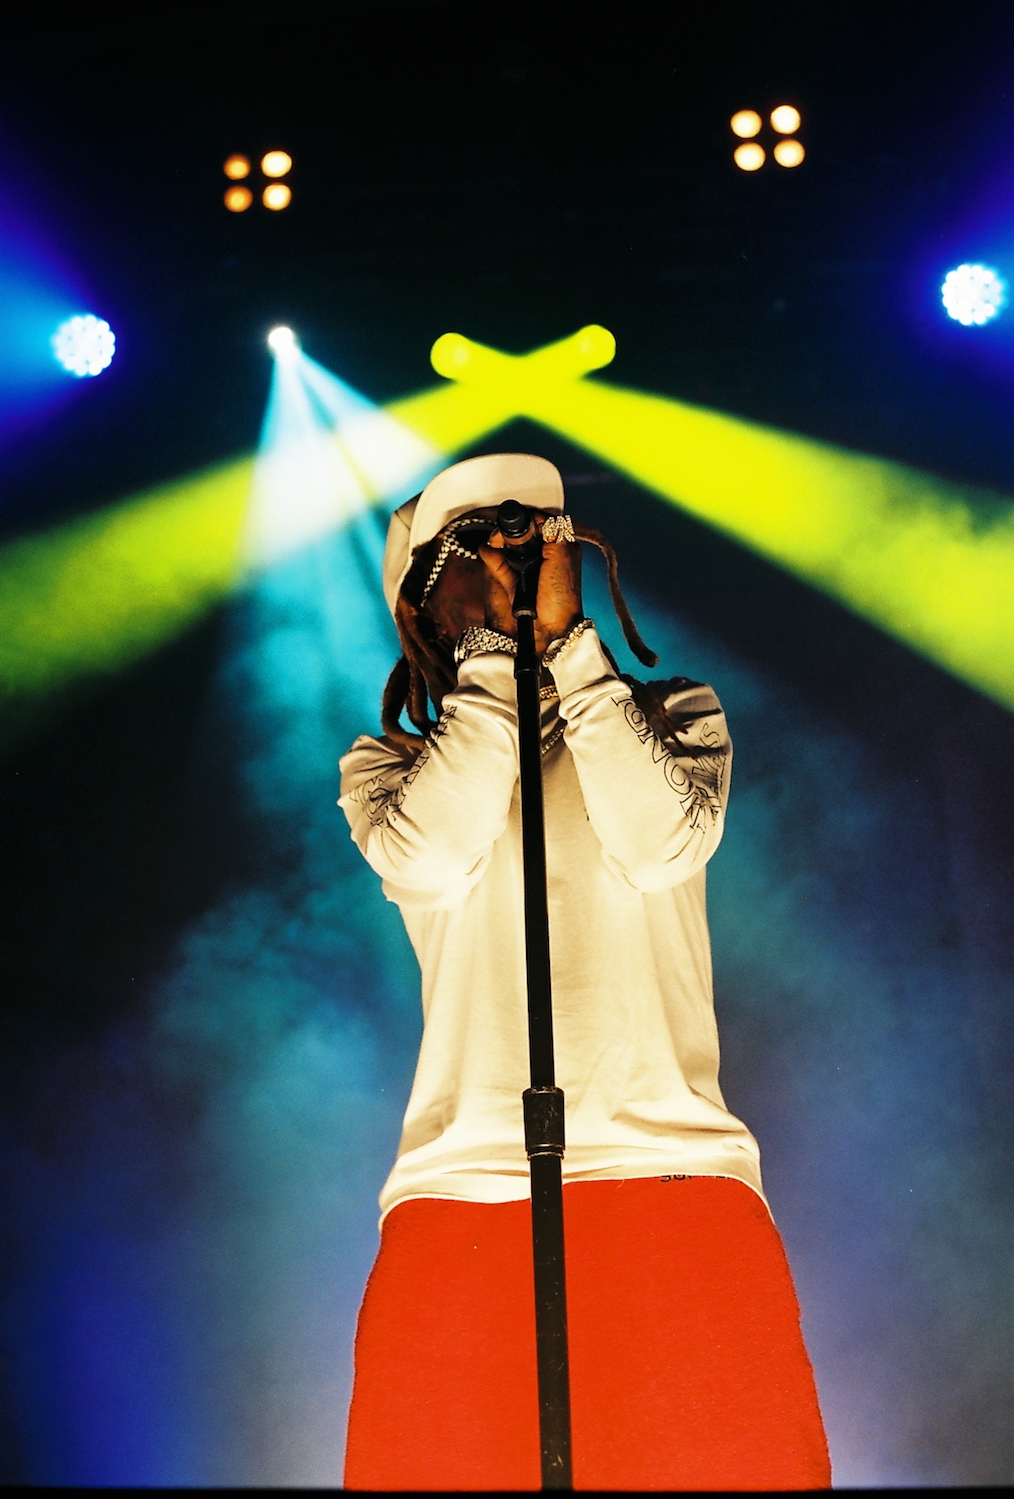 The Cut | REDDS FX | Jumanji Festival Photo Gallery 1 | Lil Wayne